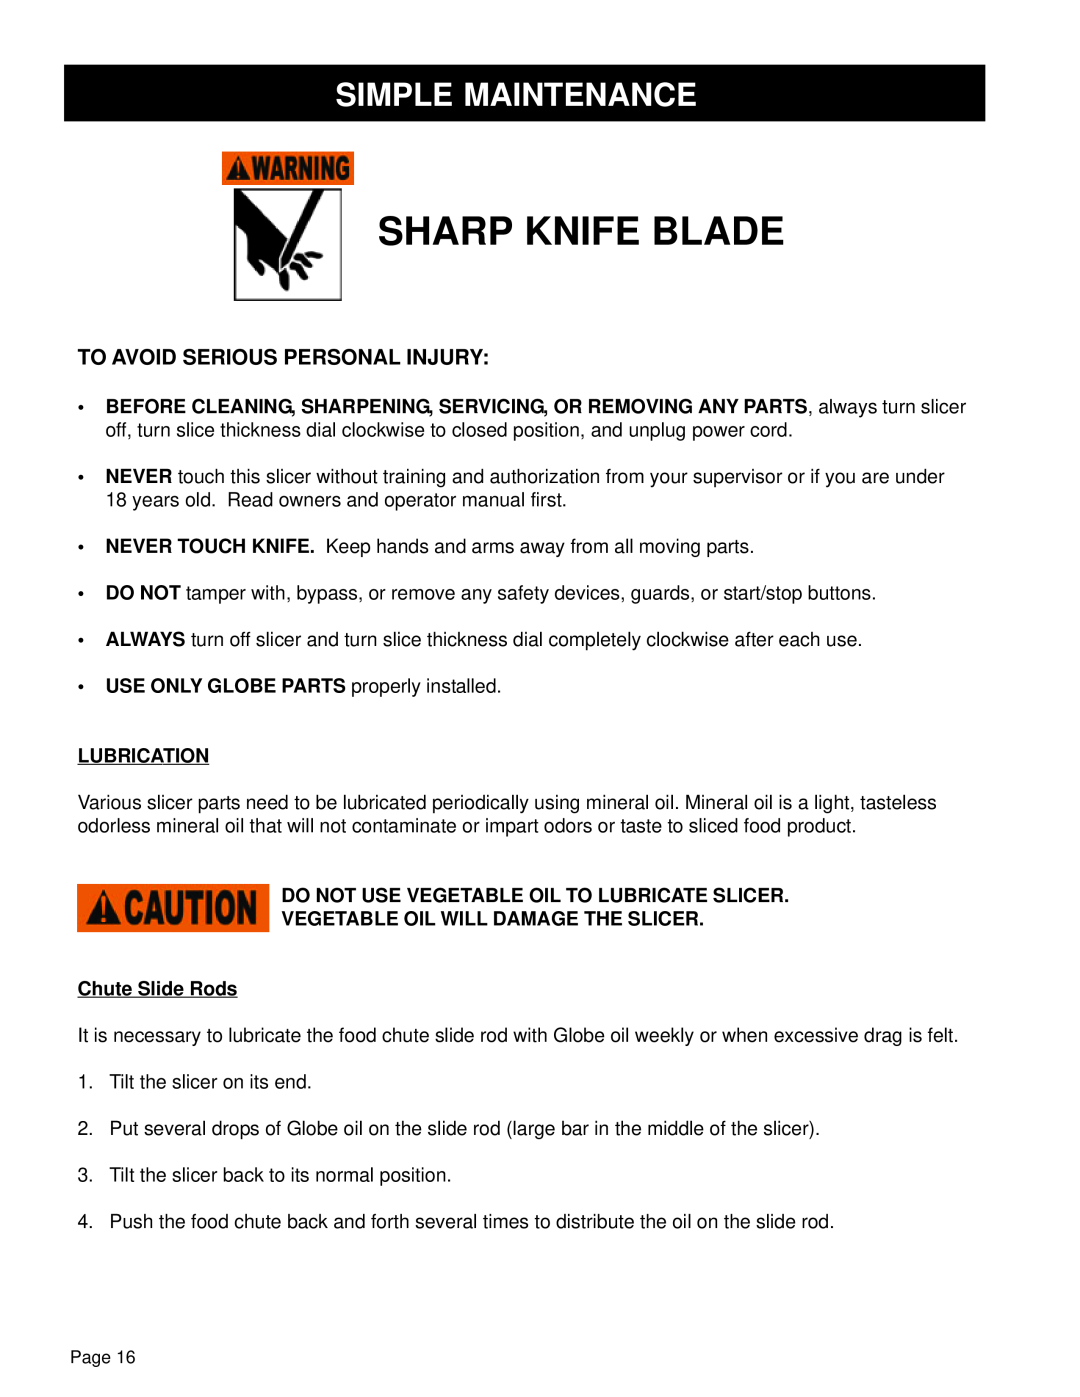 Globe GL12 Simple Maintenance, Sharp Knife Blade, To Avoid Serious Personal Injury, Lubrication, Chute Slide Rods 